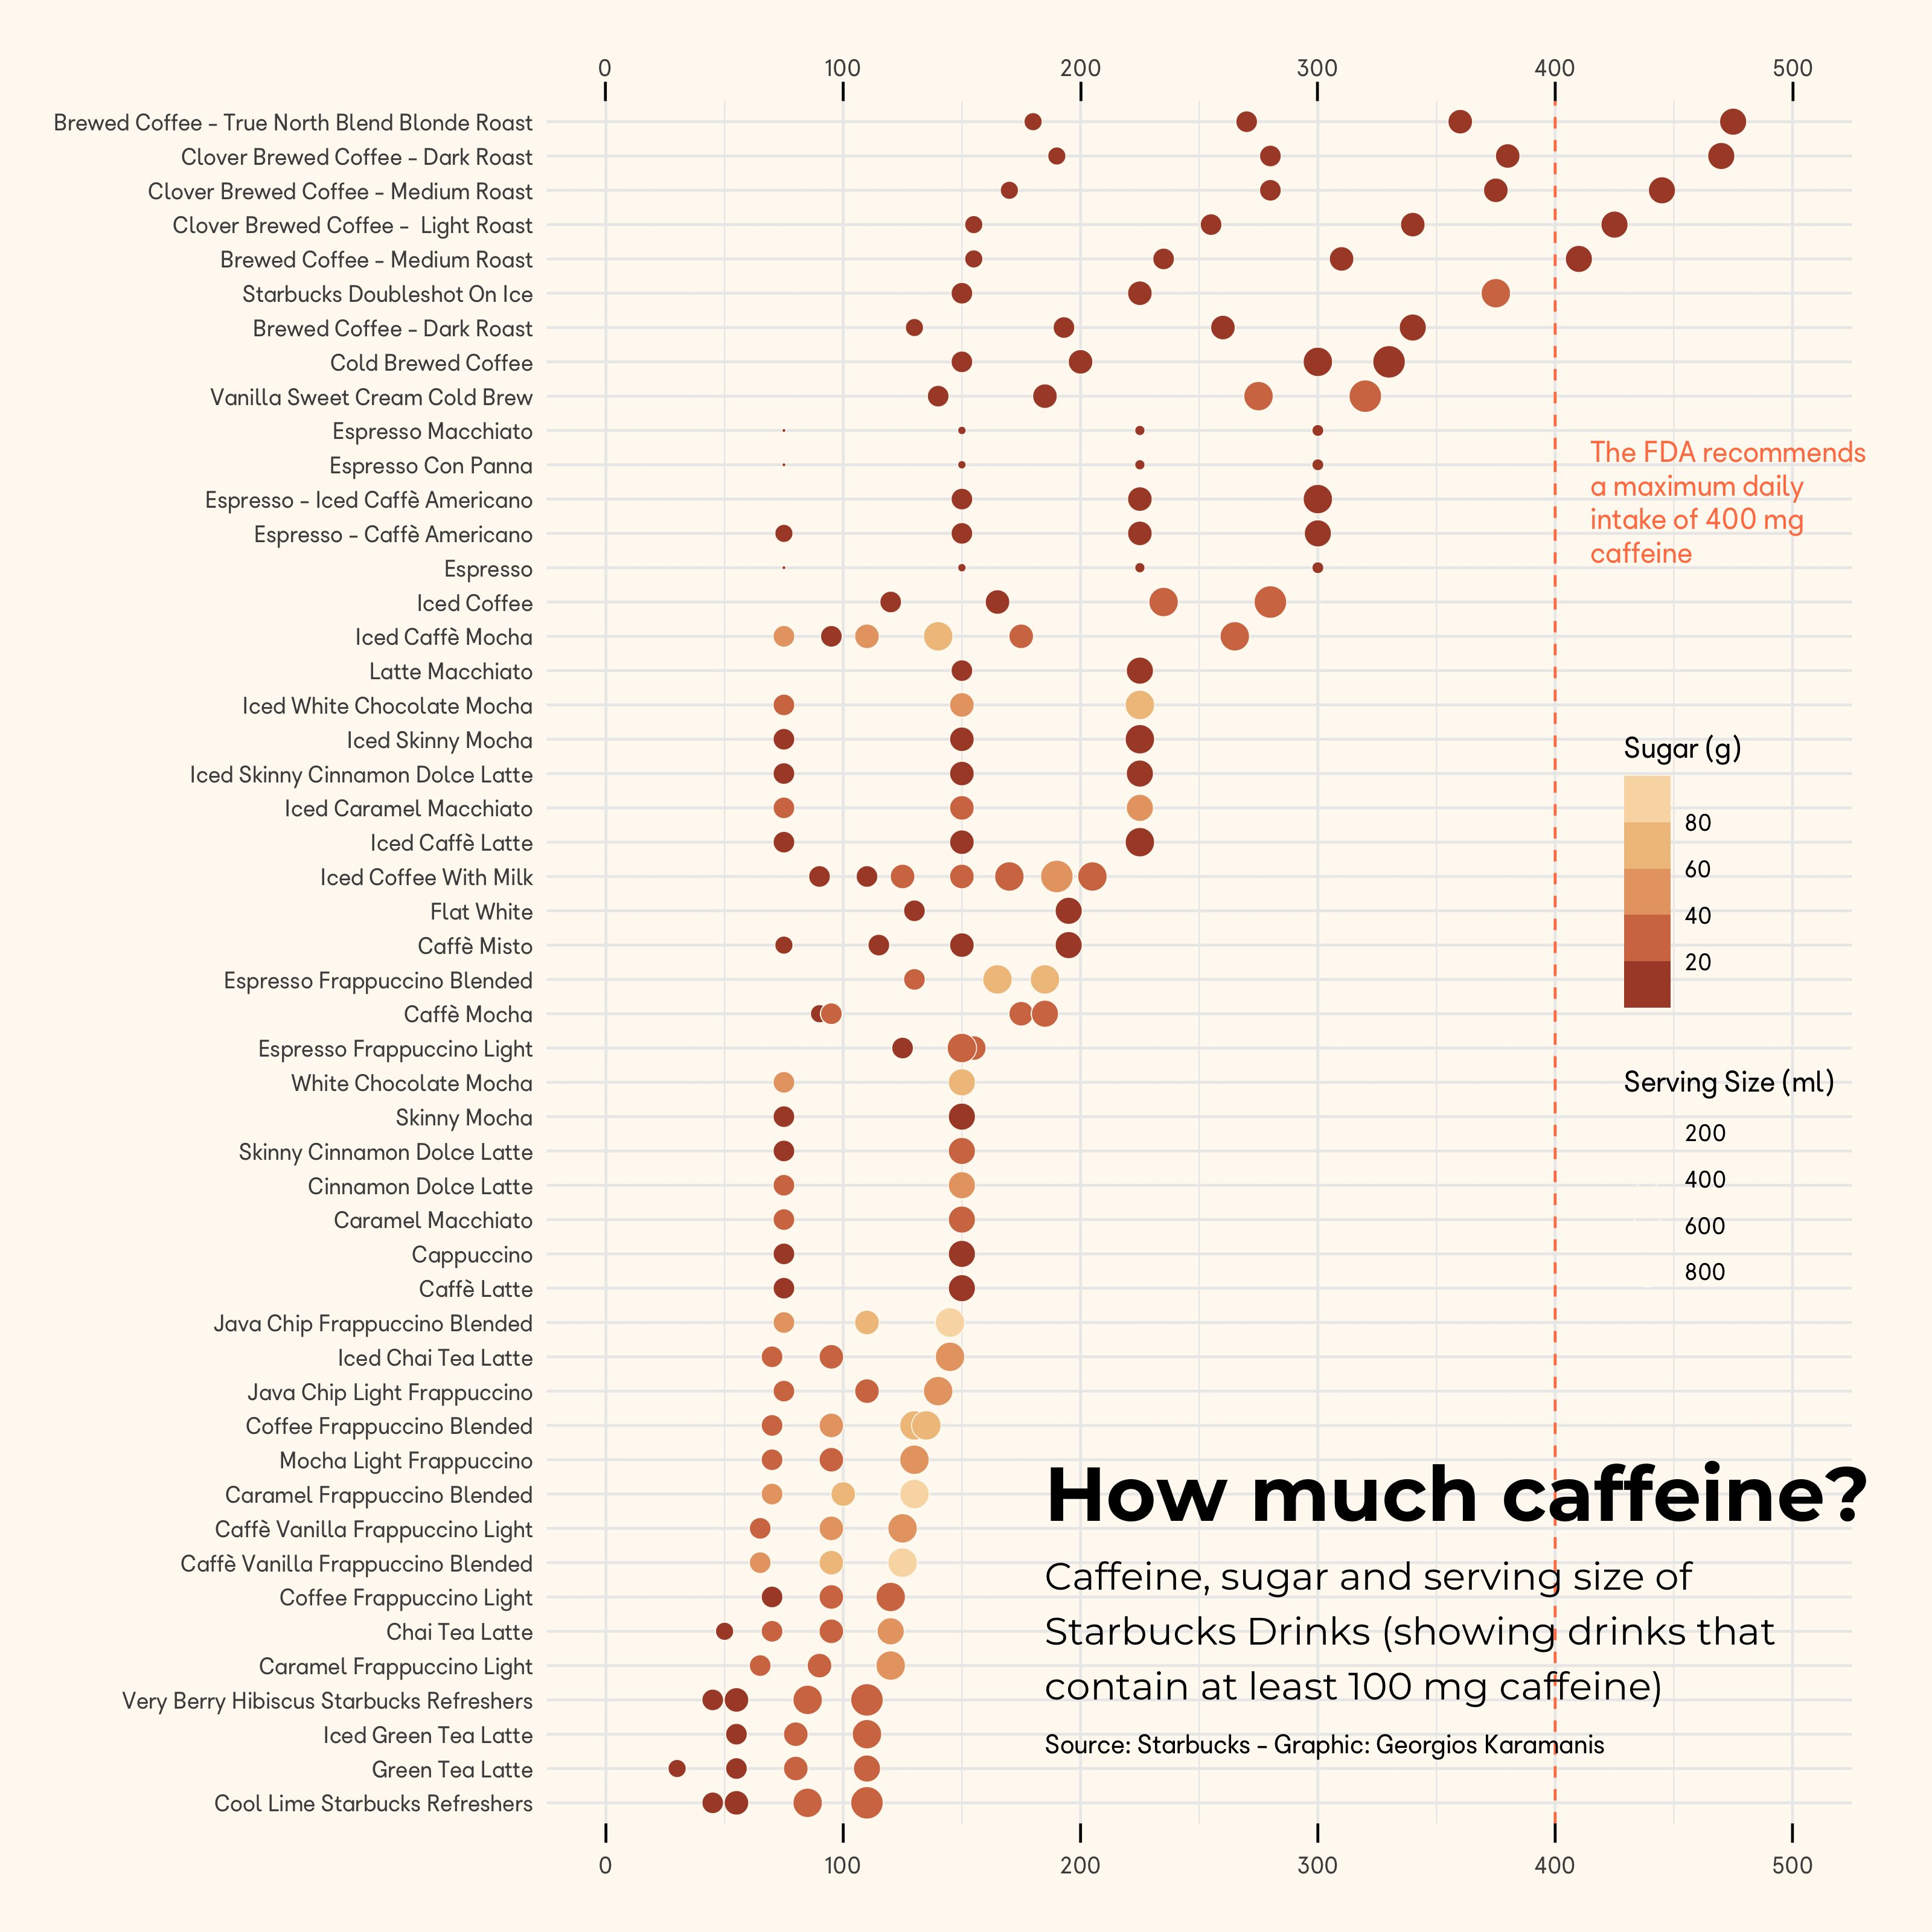 caffeine sugar and serving size of Starbucks drinks